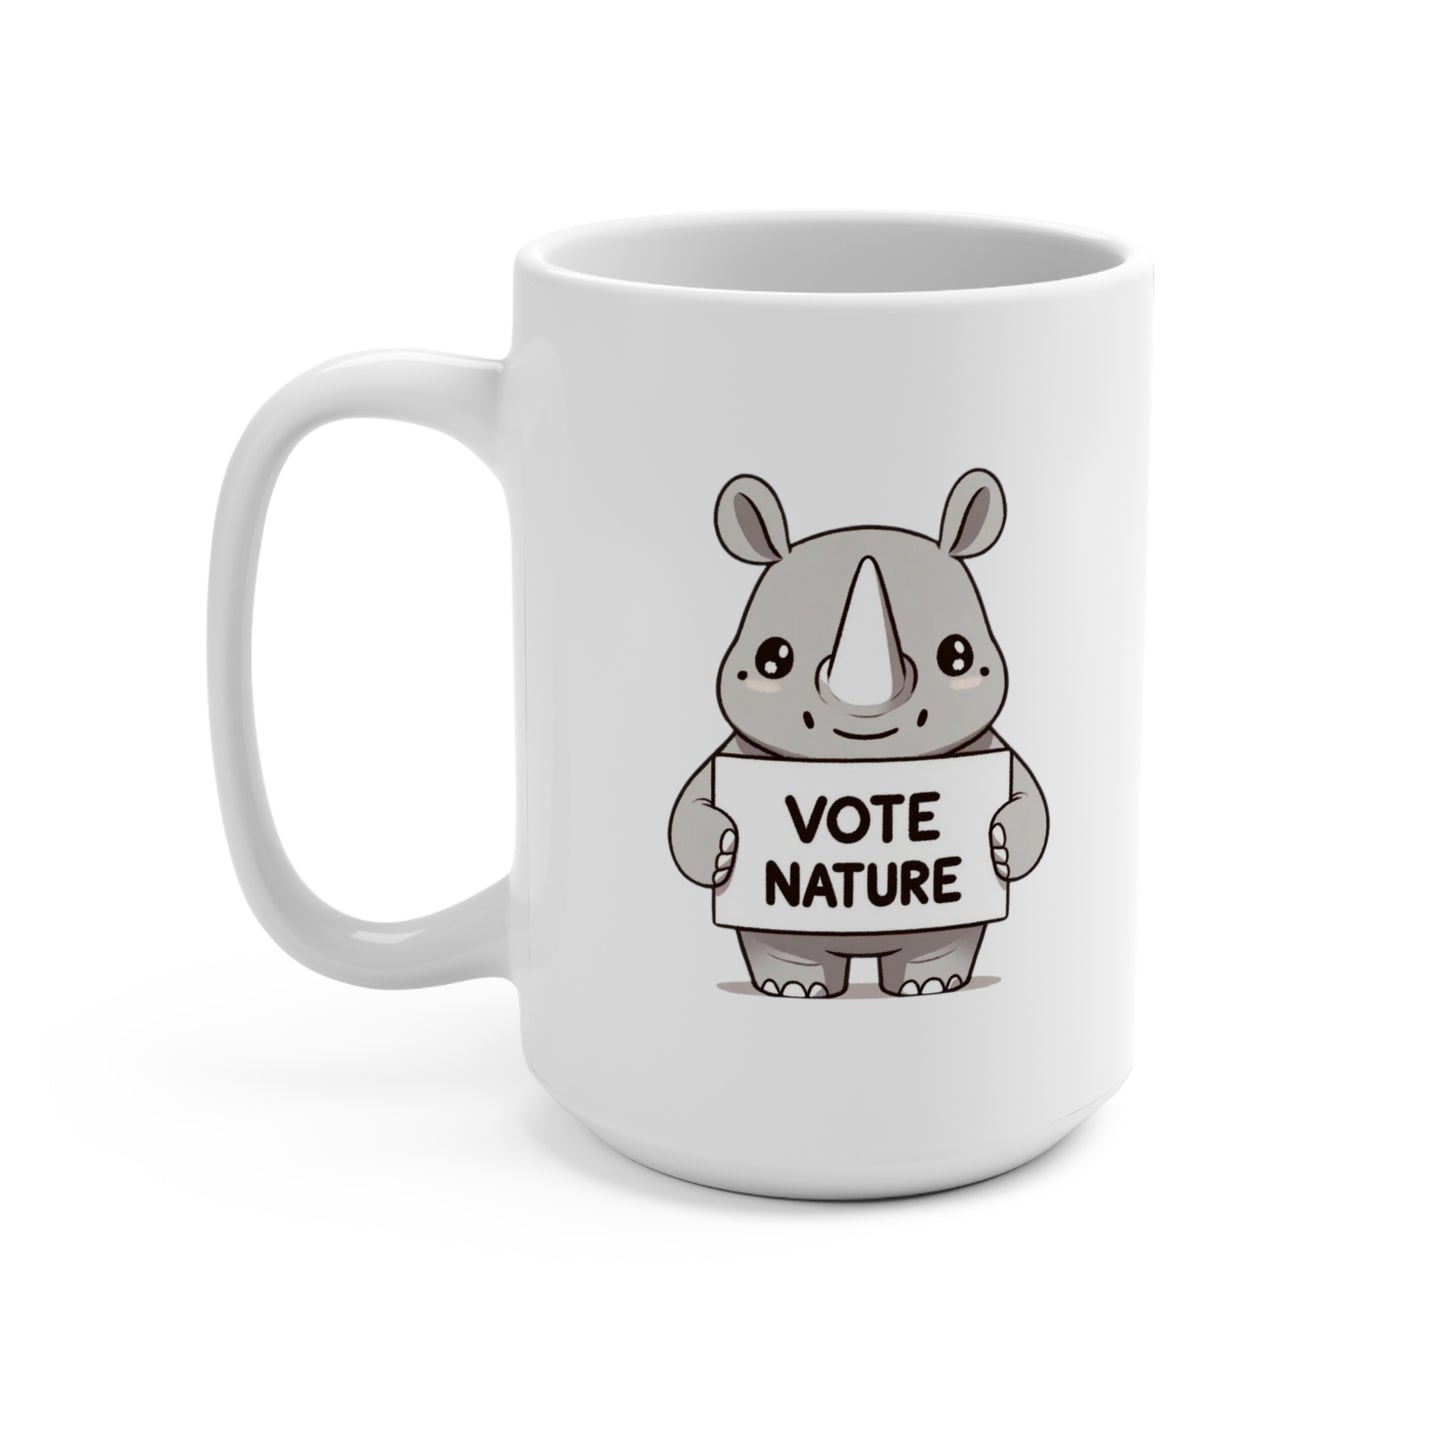 Inspirational Cute Rhino Statement Coffee Mug (15oz): Vote Nature! Be a cute activist!